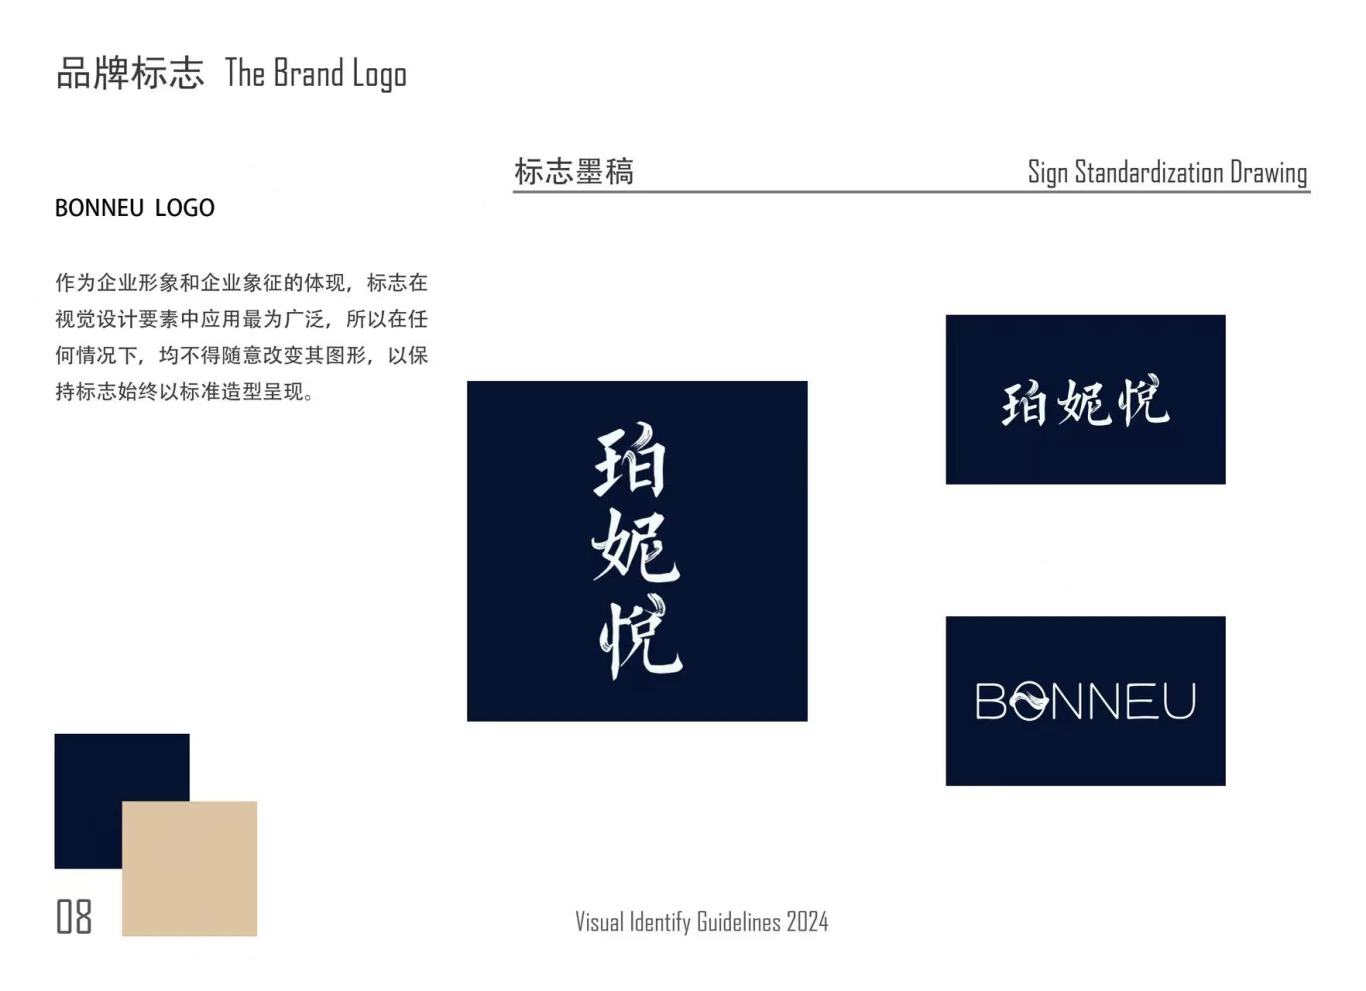 BONNEU国姿铂妮悦 民族护肤品牌 包装设计及品牌策划图7